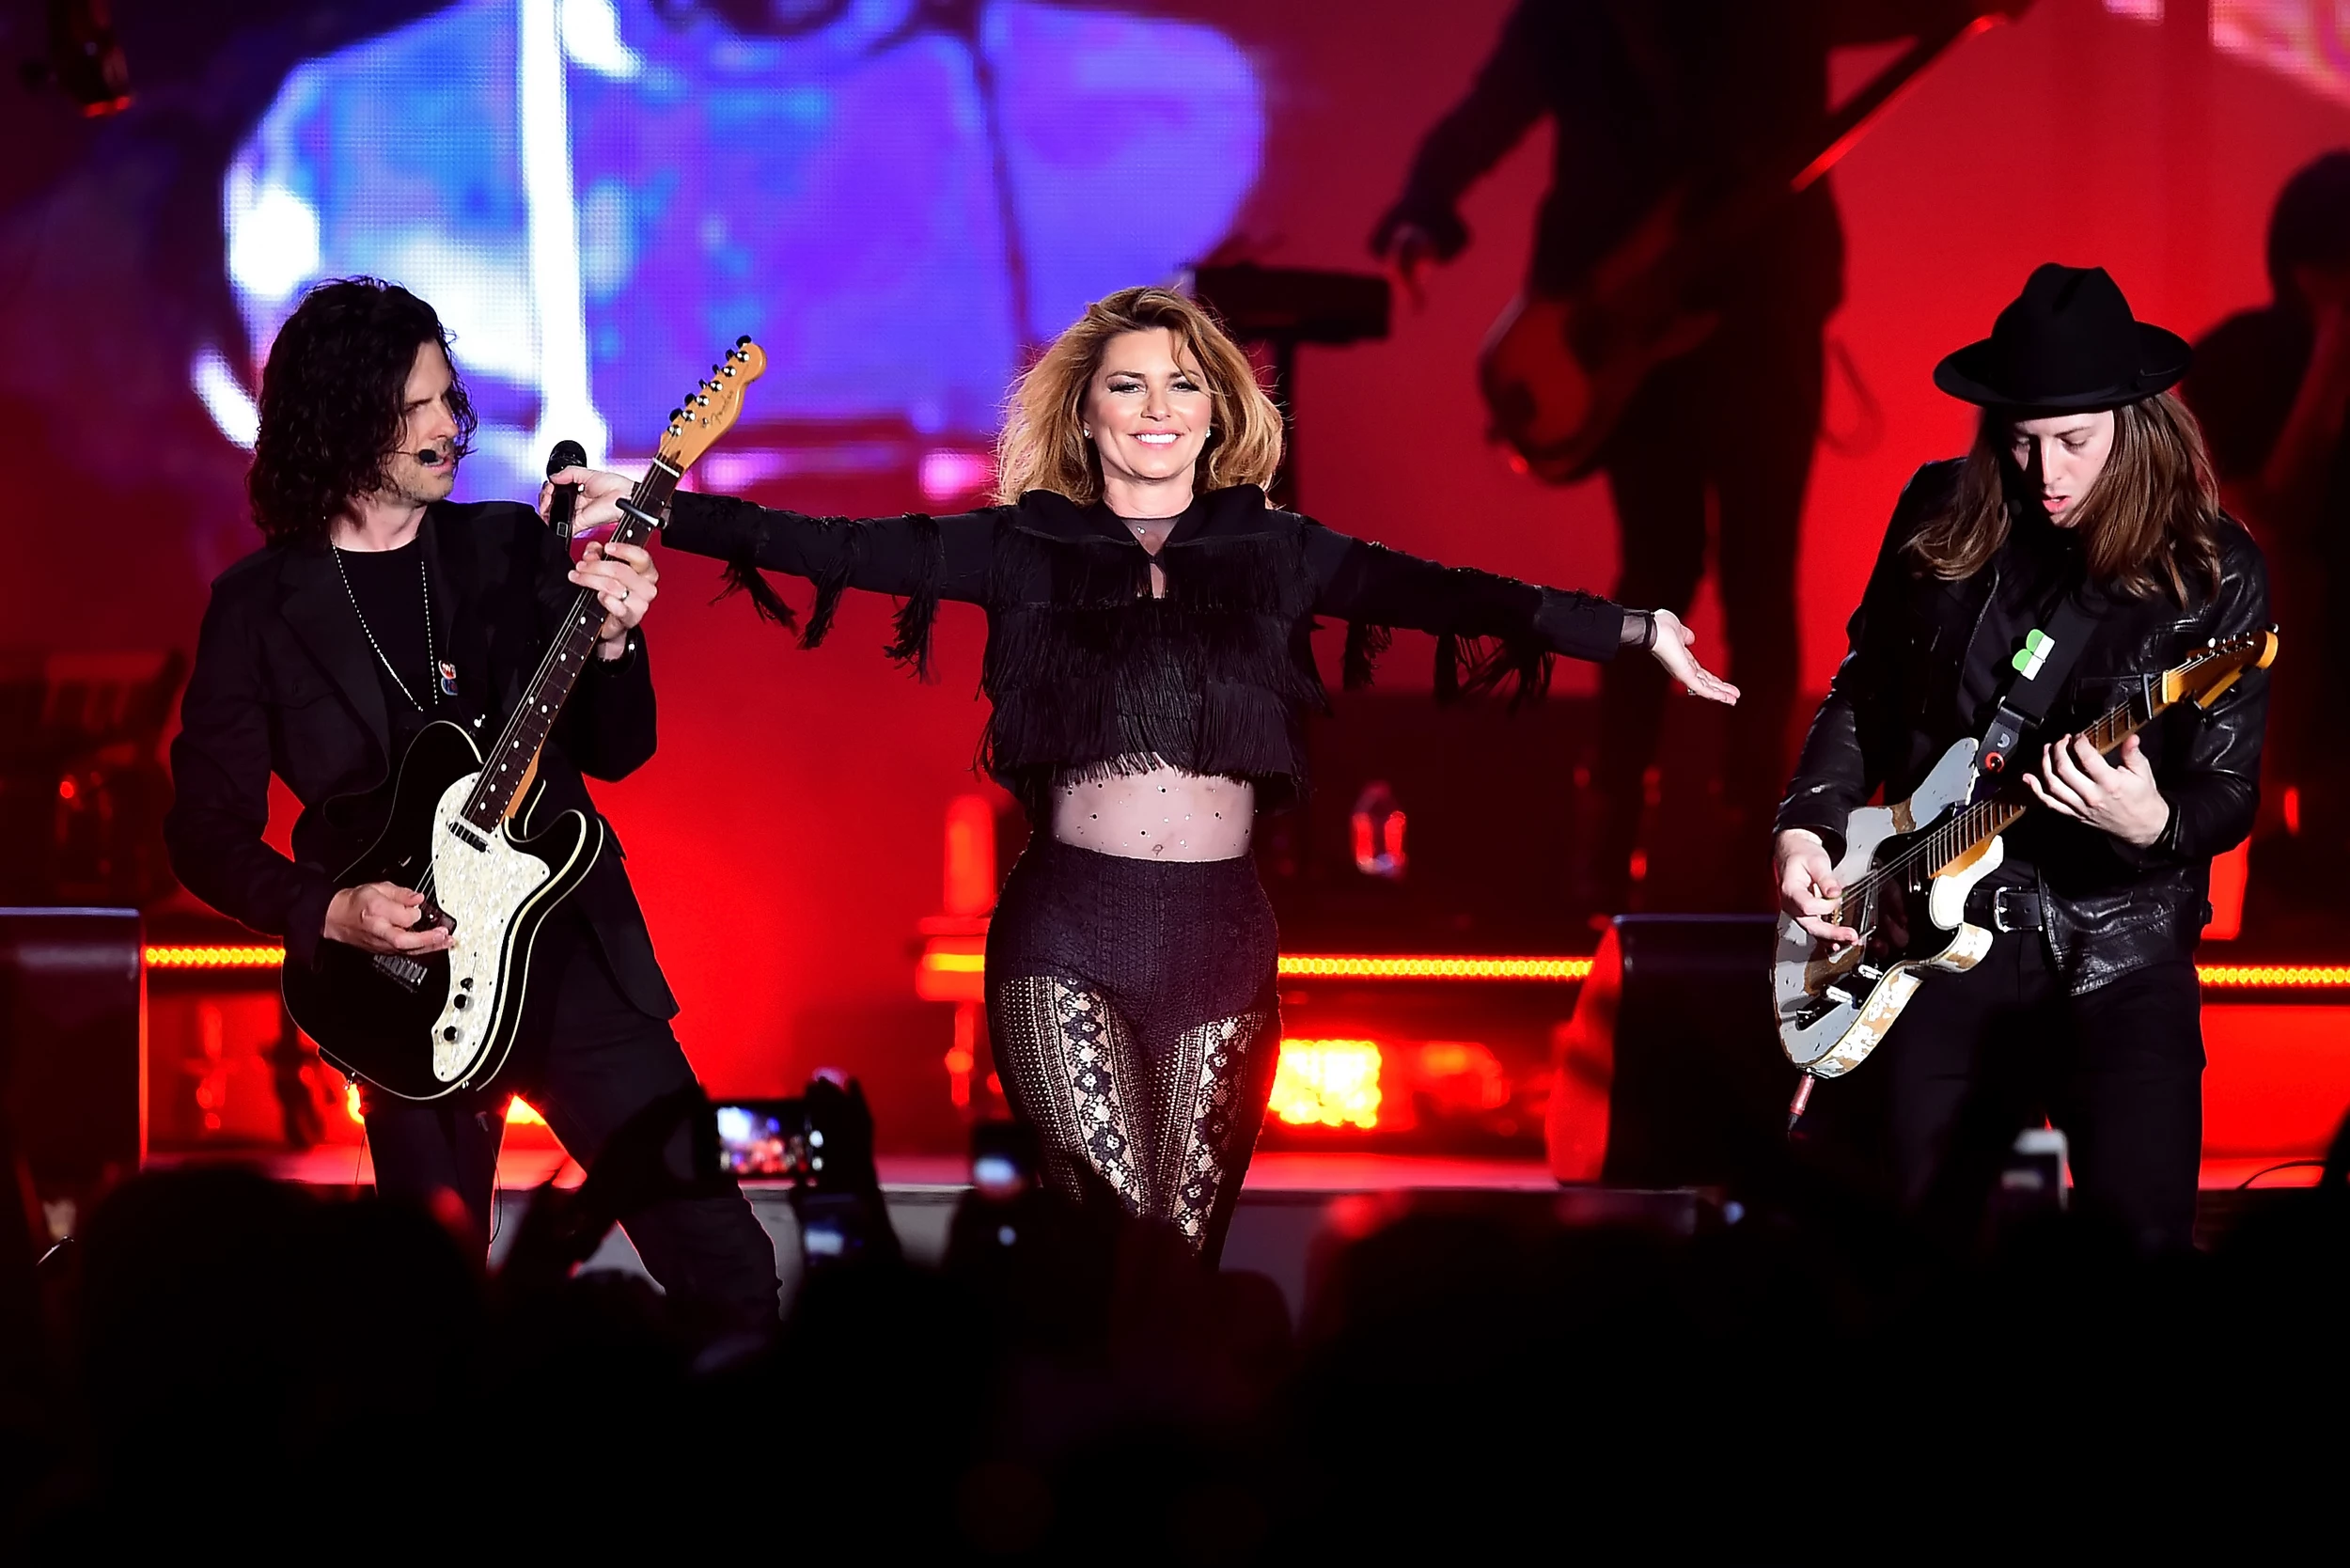 Shania Twain Sings With Kelsea Ballerini, Nick Jonas at Stagecoach